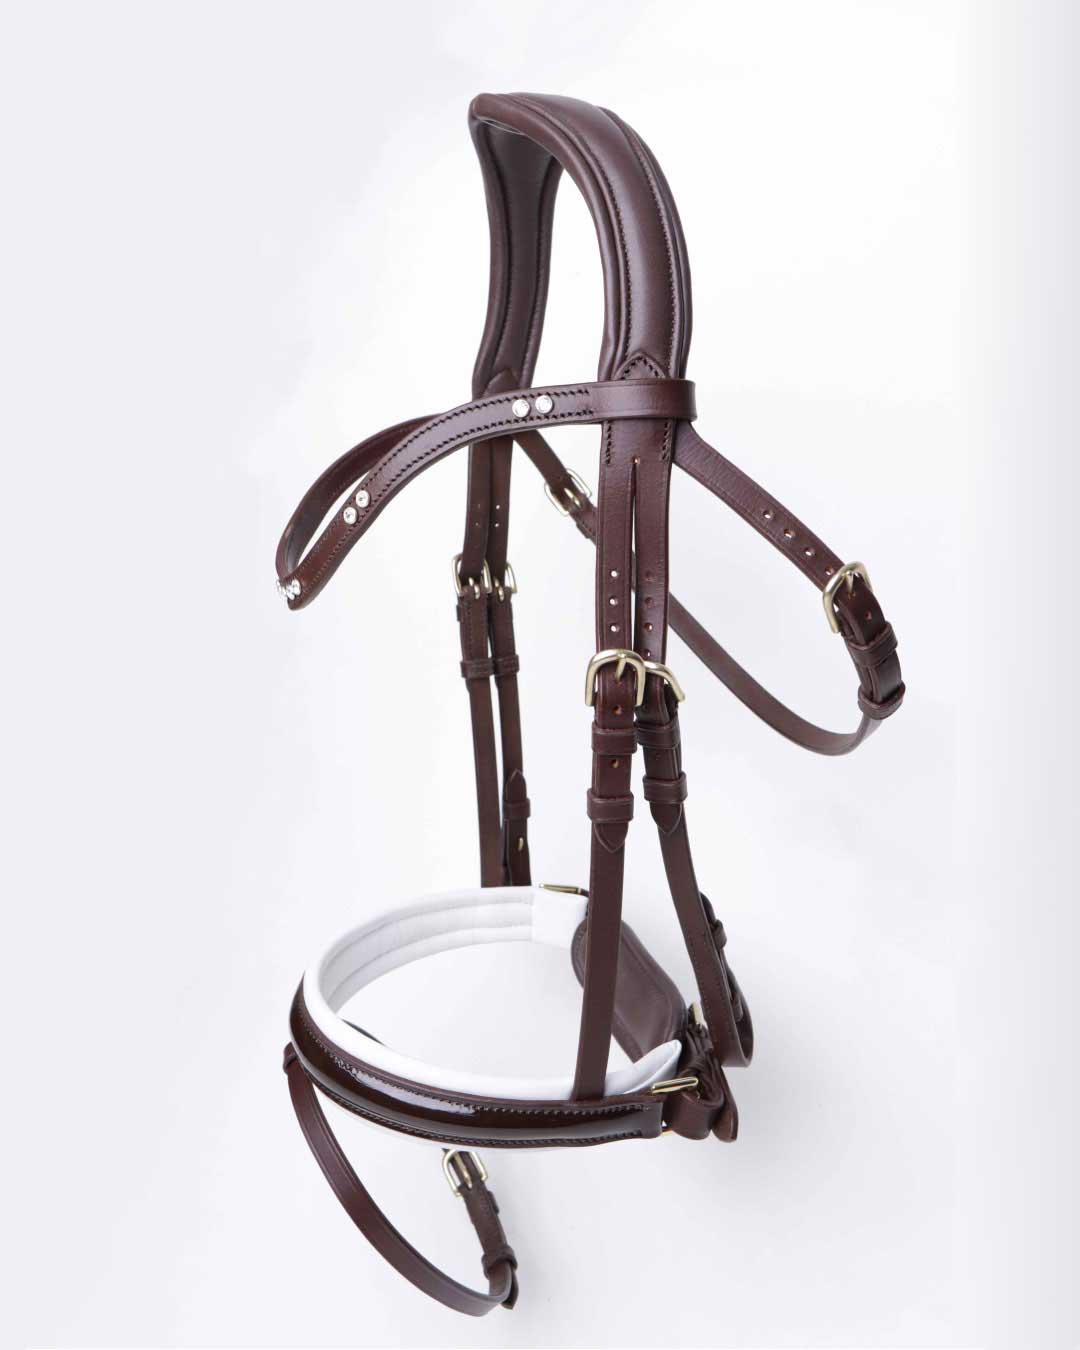 Tajmahal classic dressage flash bridle patent swarovski browband including reins.